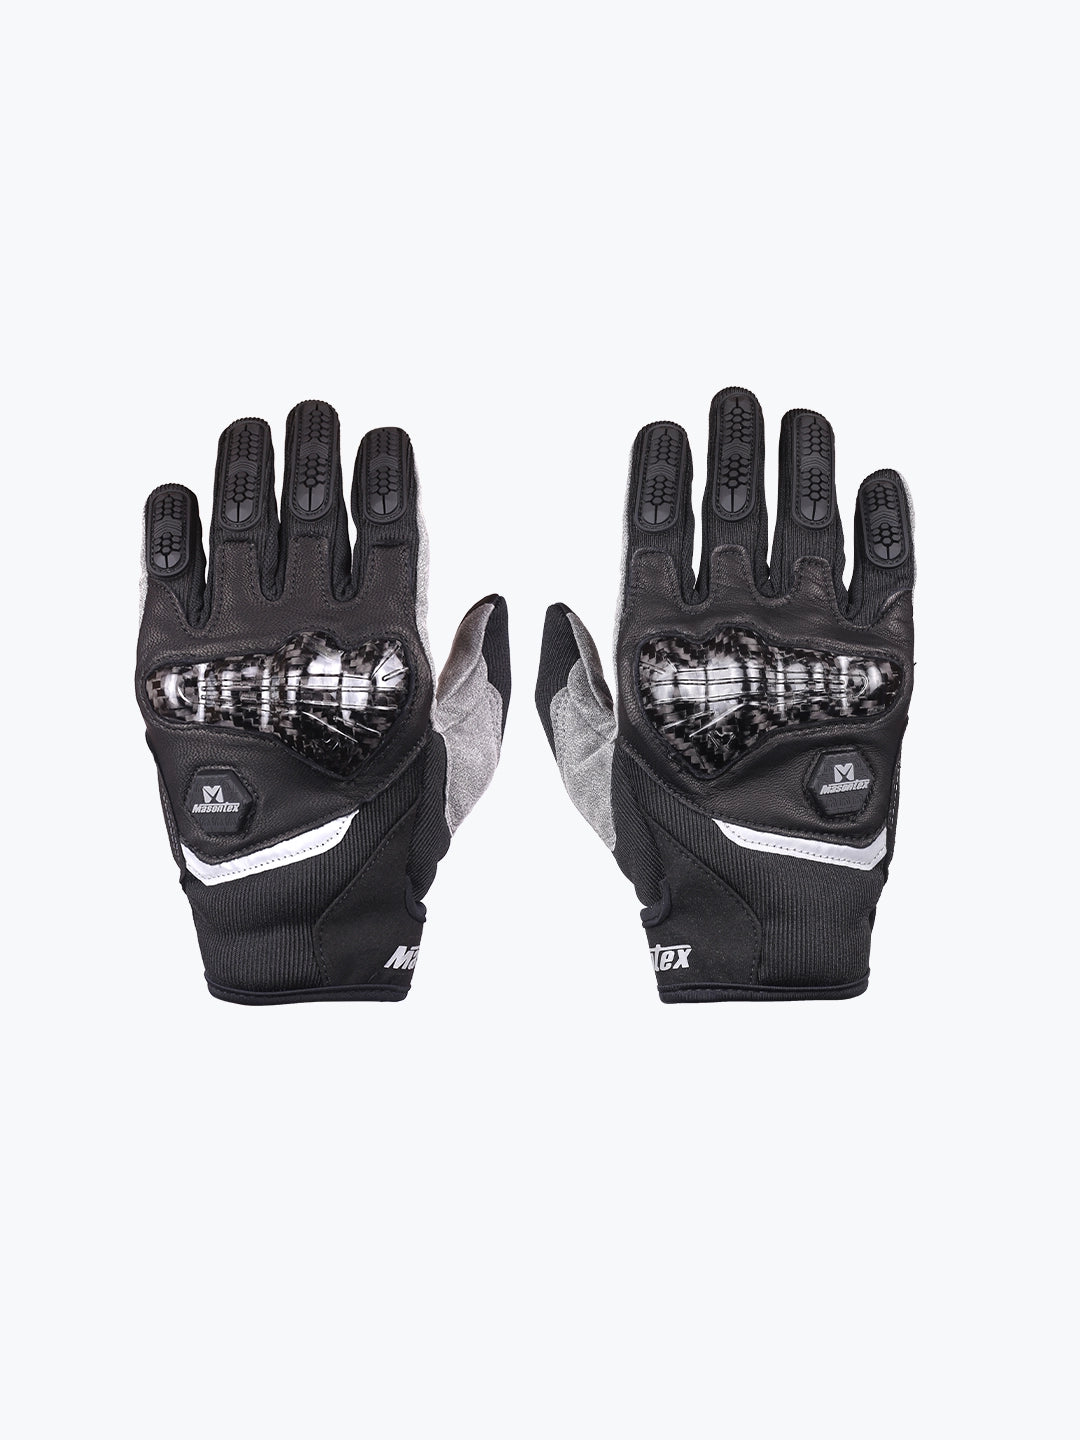 Masontex Full Gloves Black M30IV Carbon